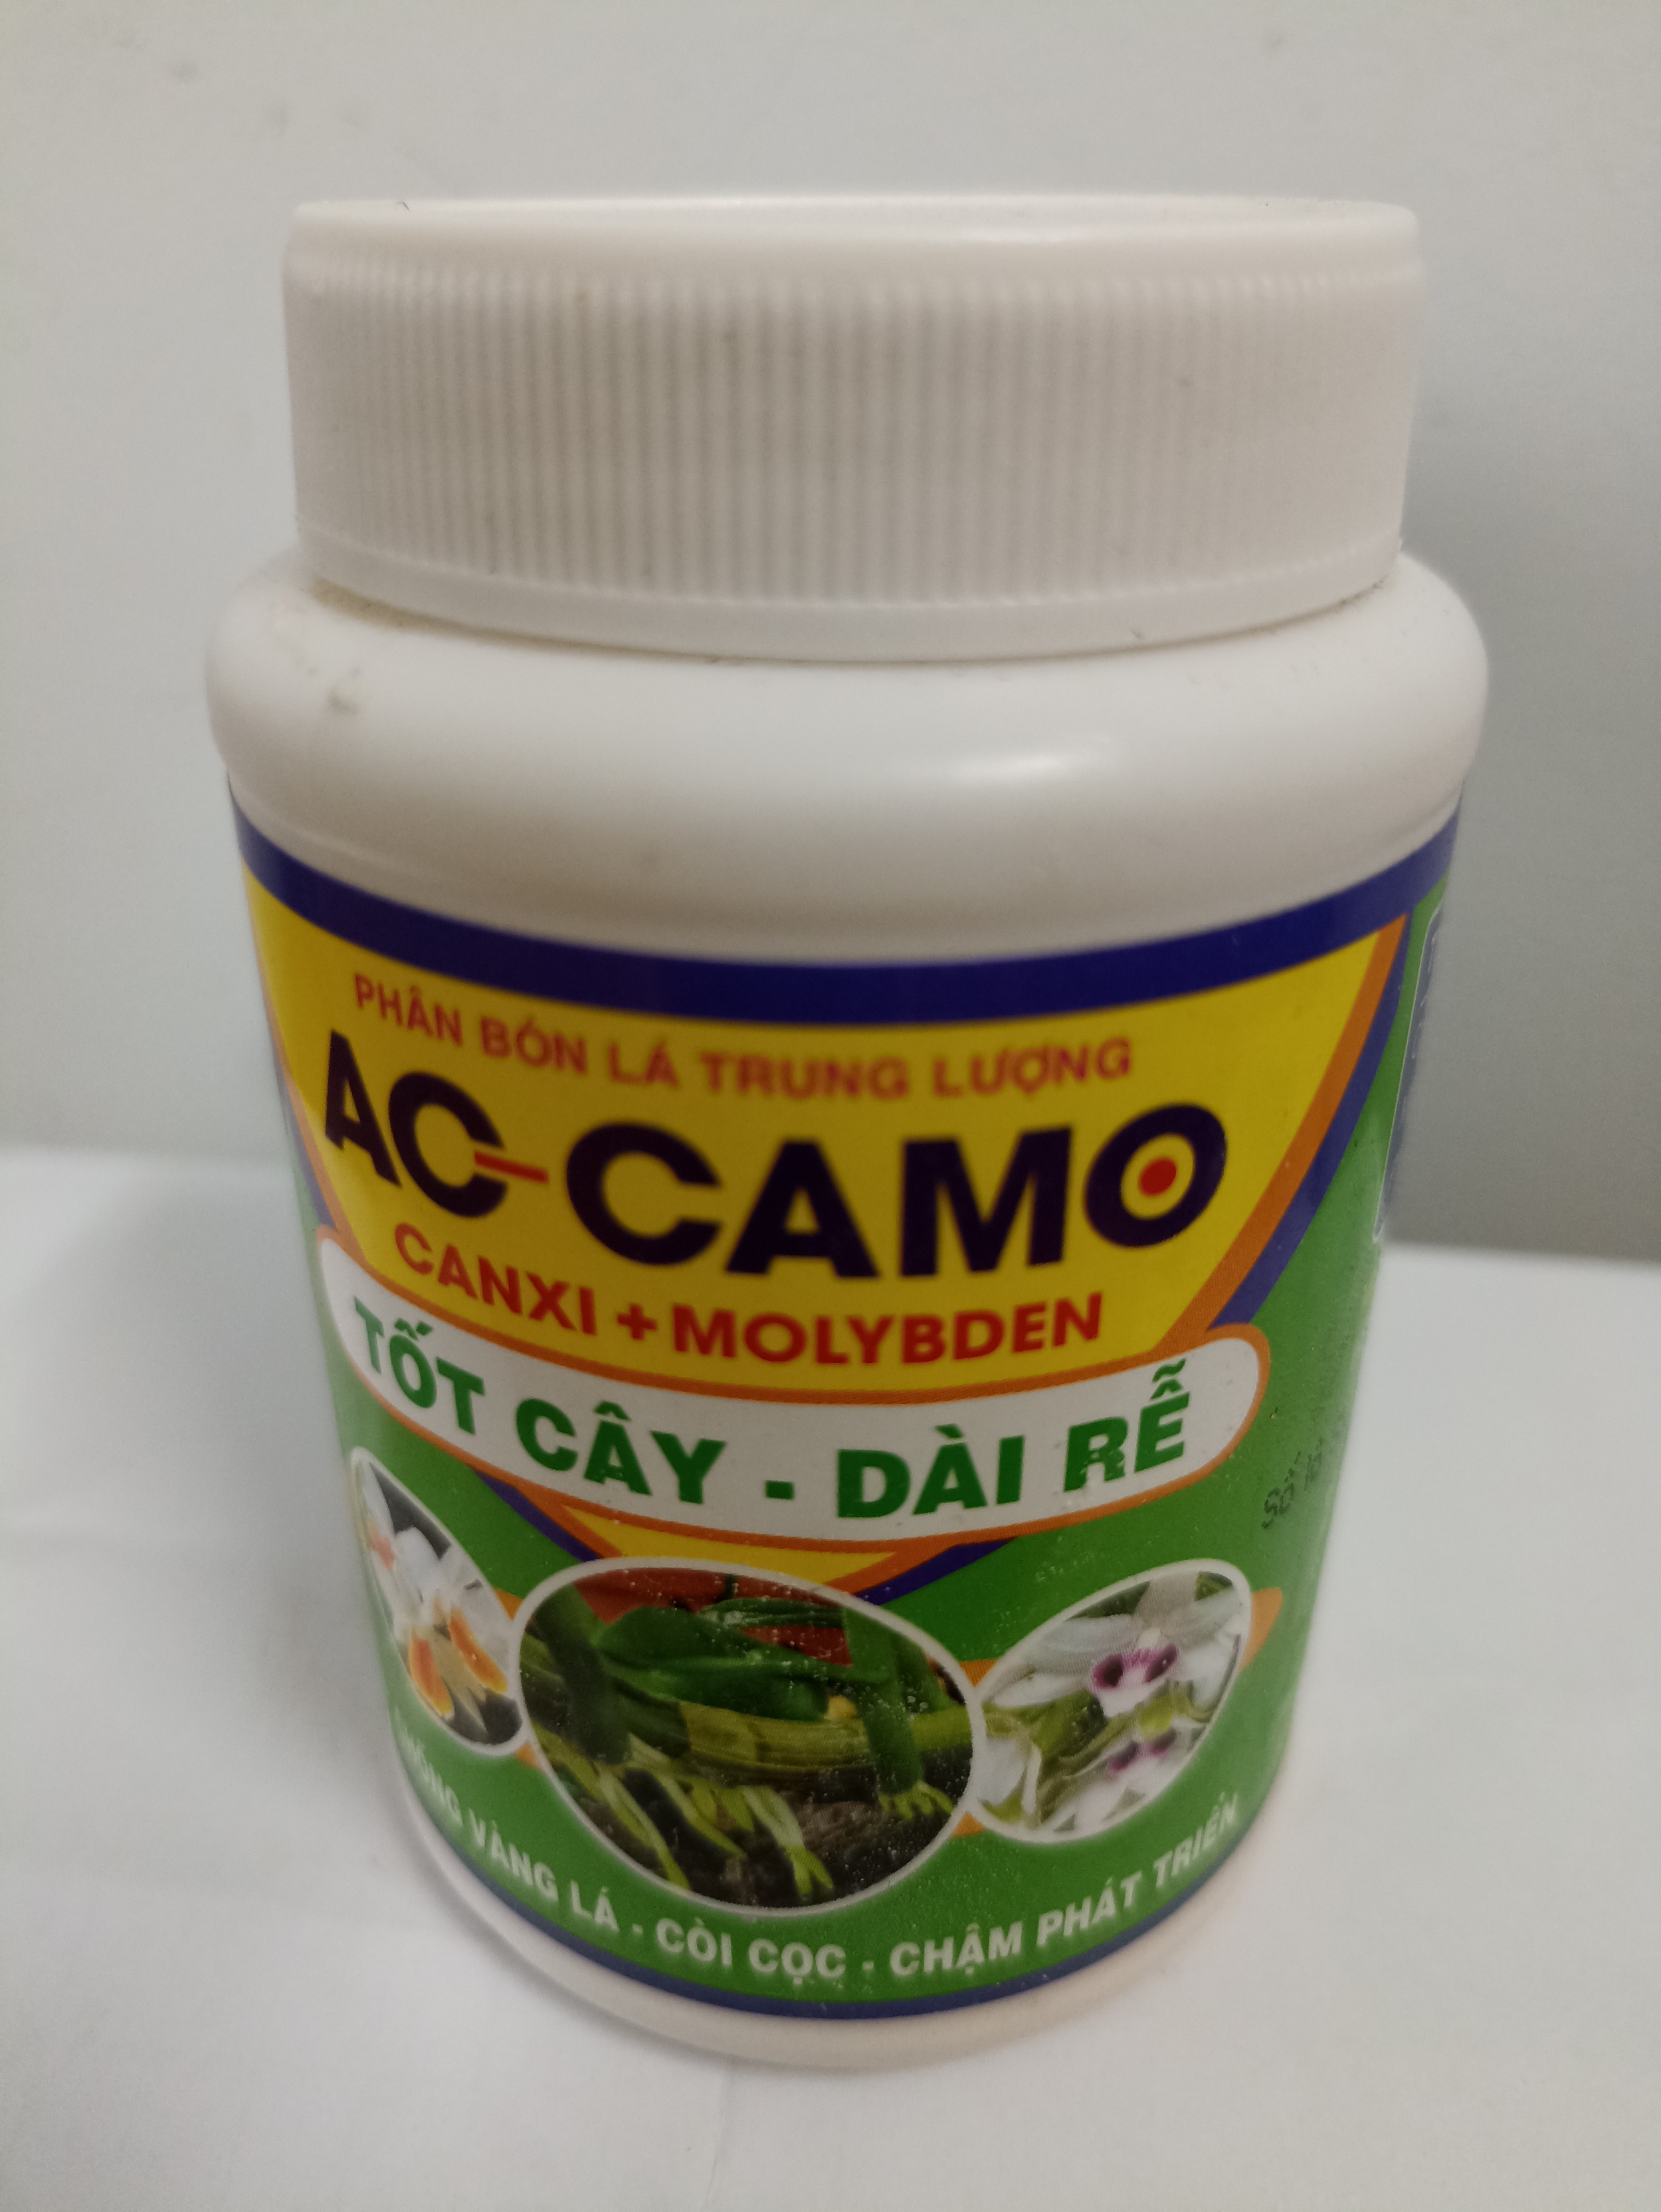 Phân bón lá AC - CAMO bổ sung Ca +Molybden tốt cây dài rễ - chai 100 gram